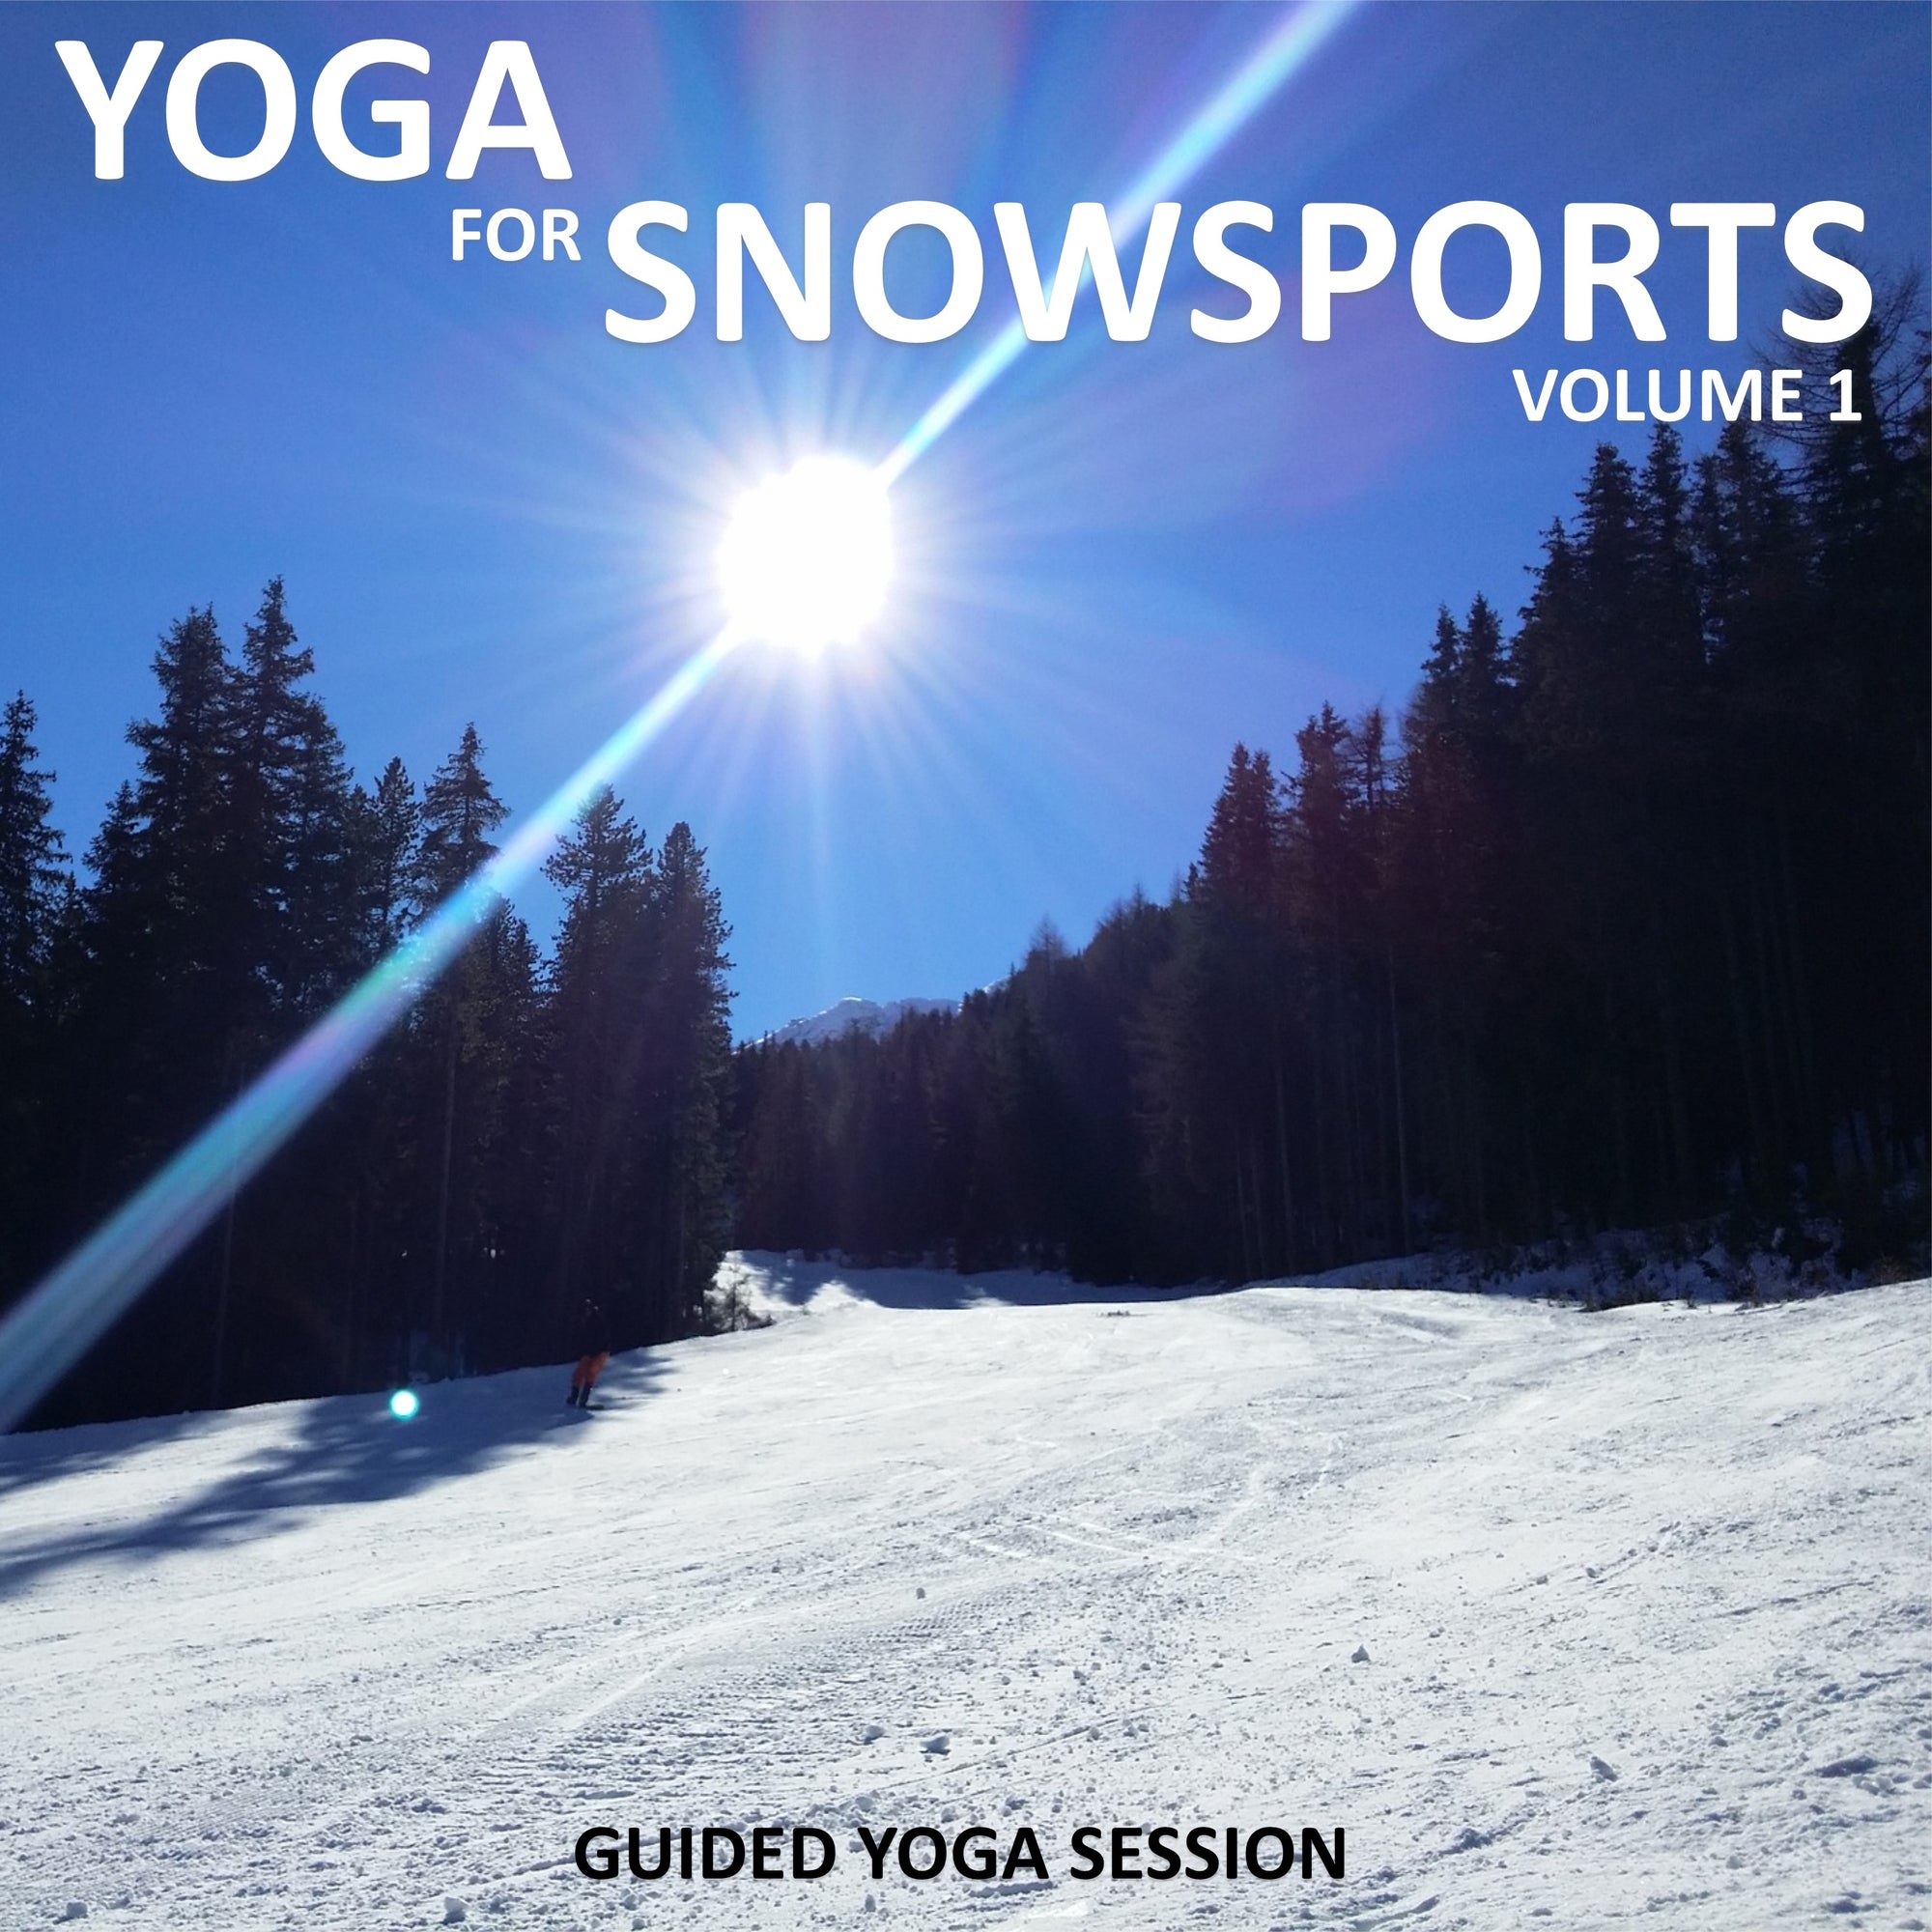 Yoga for Snow Sports Volume 1